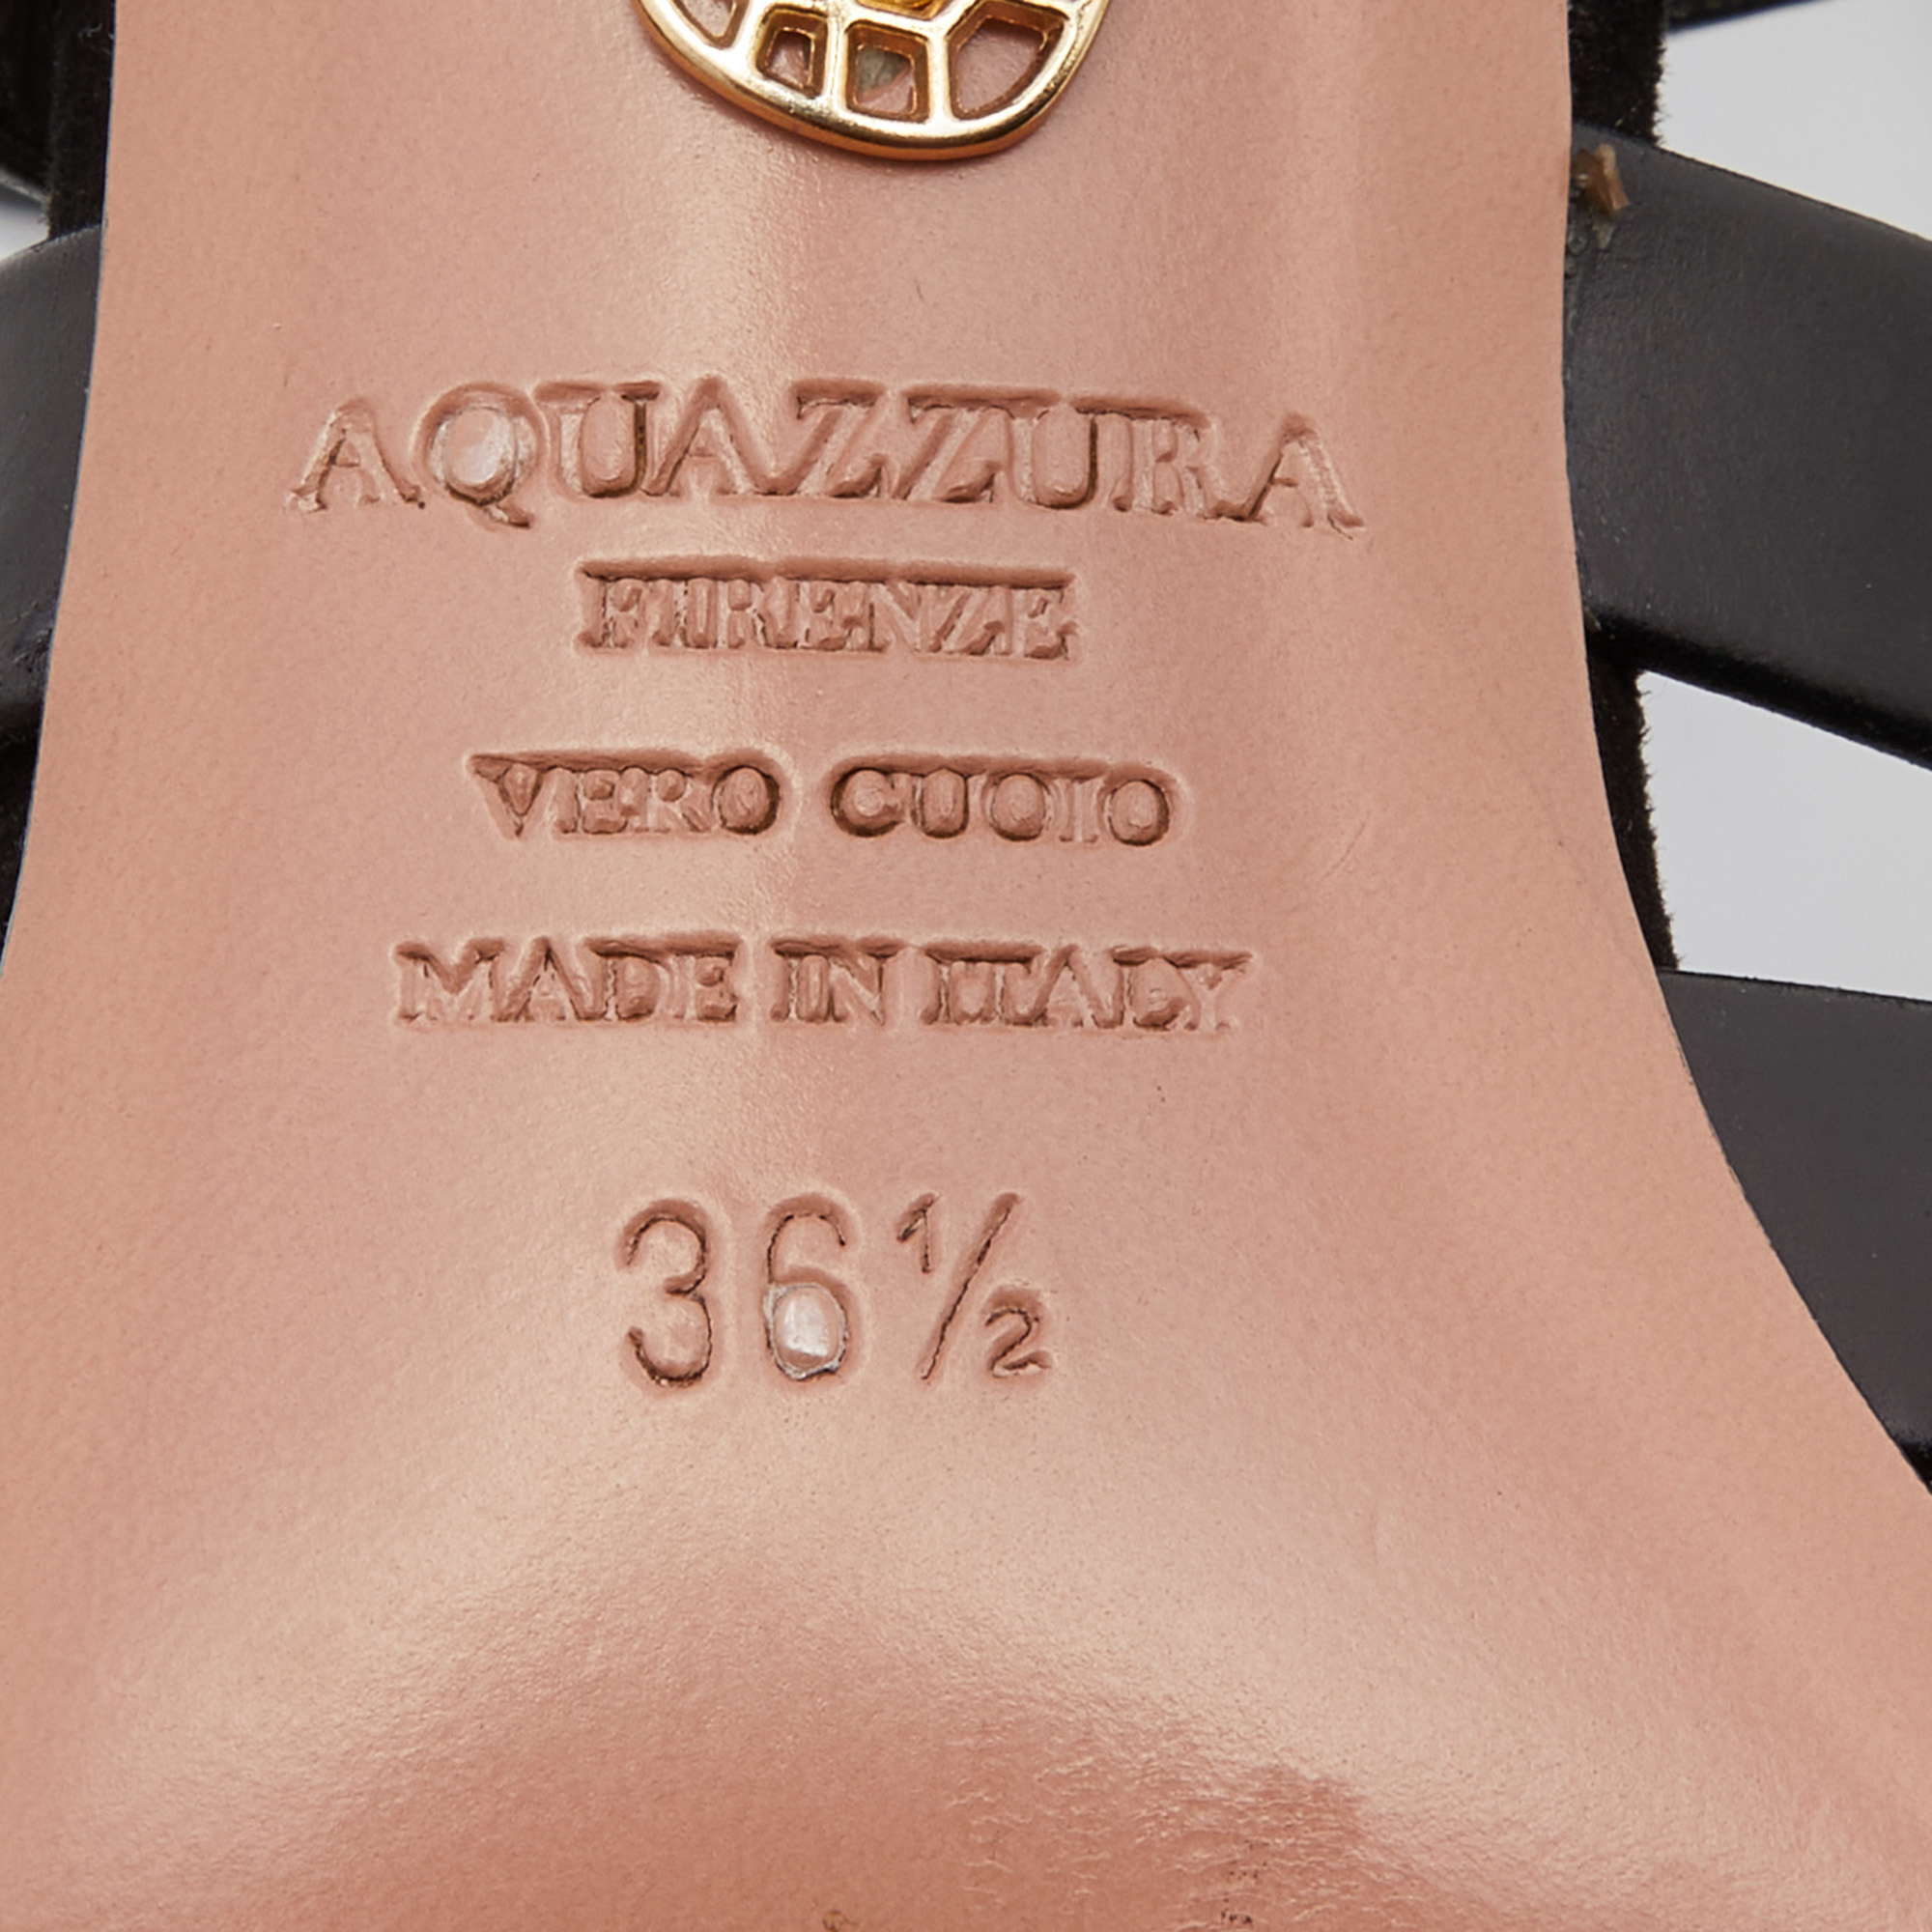 Aquazzura Black Suede And Leather Amazon Ankle Wrap Pumps Size 36.5